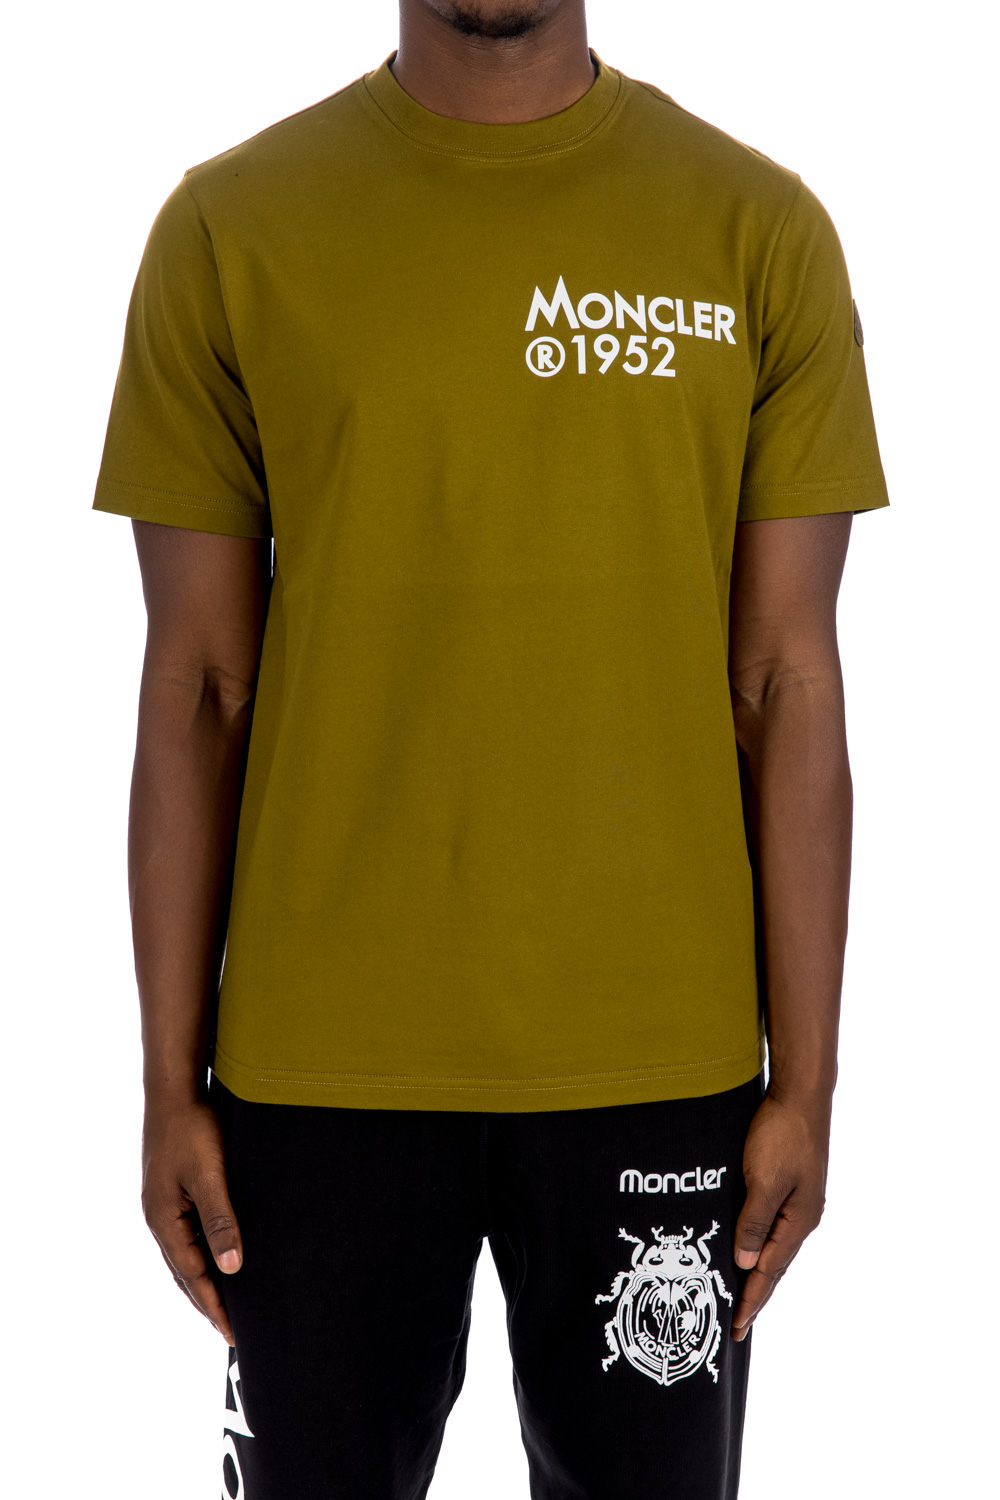 Moncler Genius Ss T-shirt | Credomen